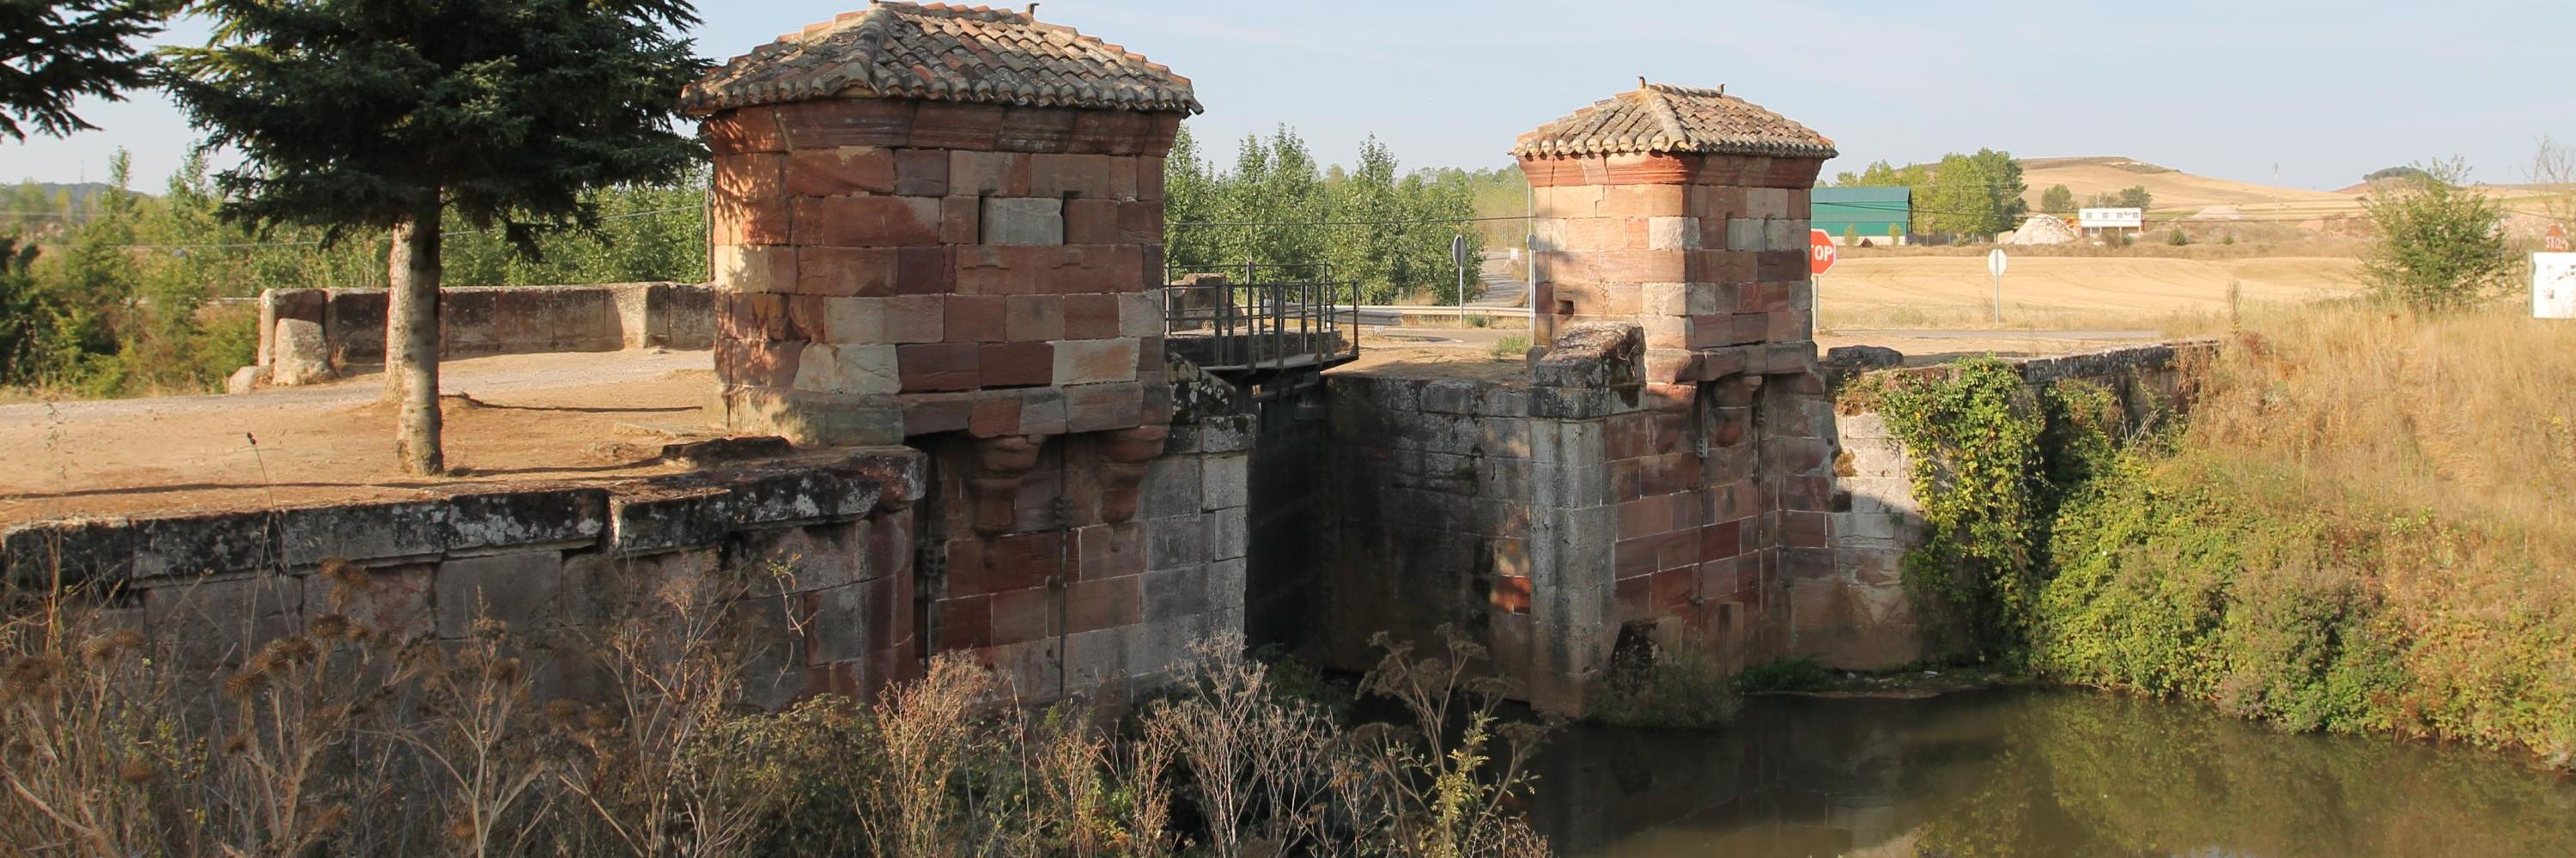 Retencion de San Andres, Canal de Castilla